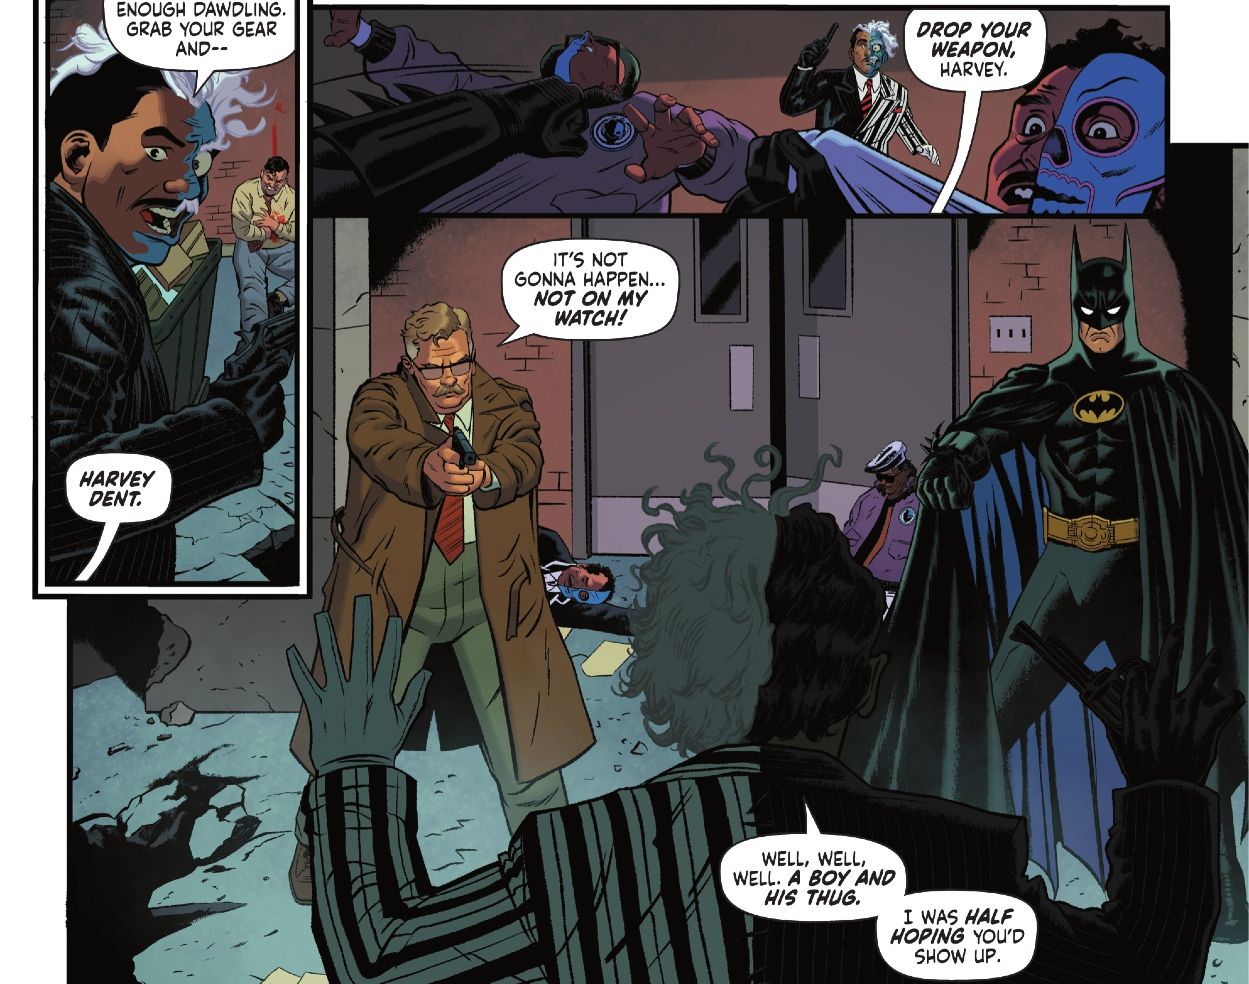 Batman and Gordon corners Harvey Dent in Batman '89 #5 